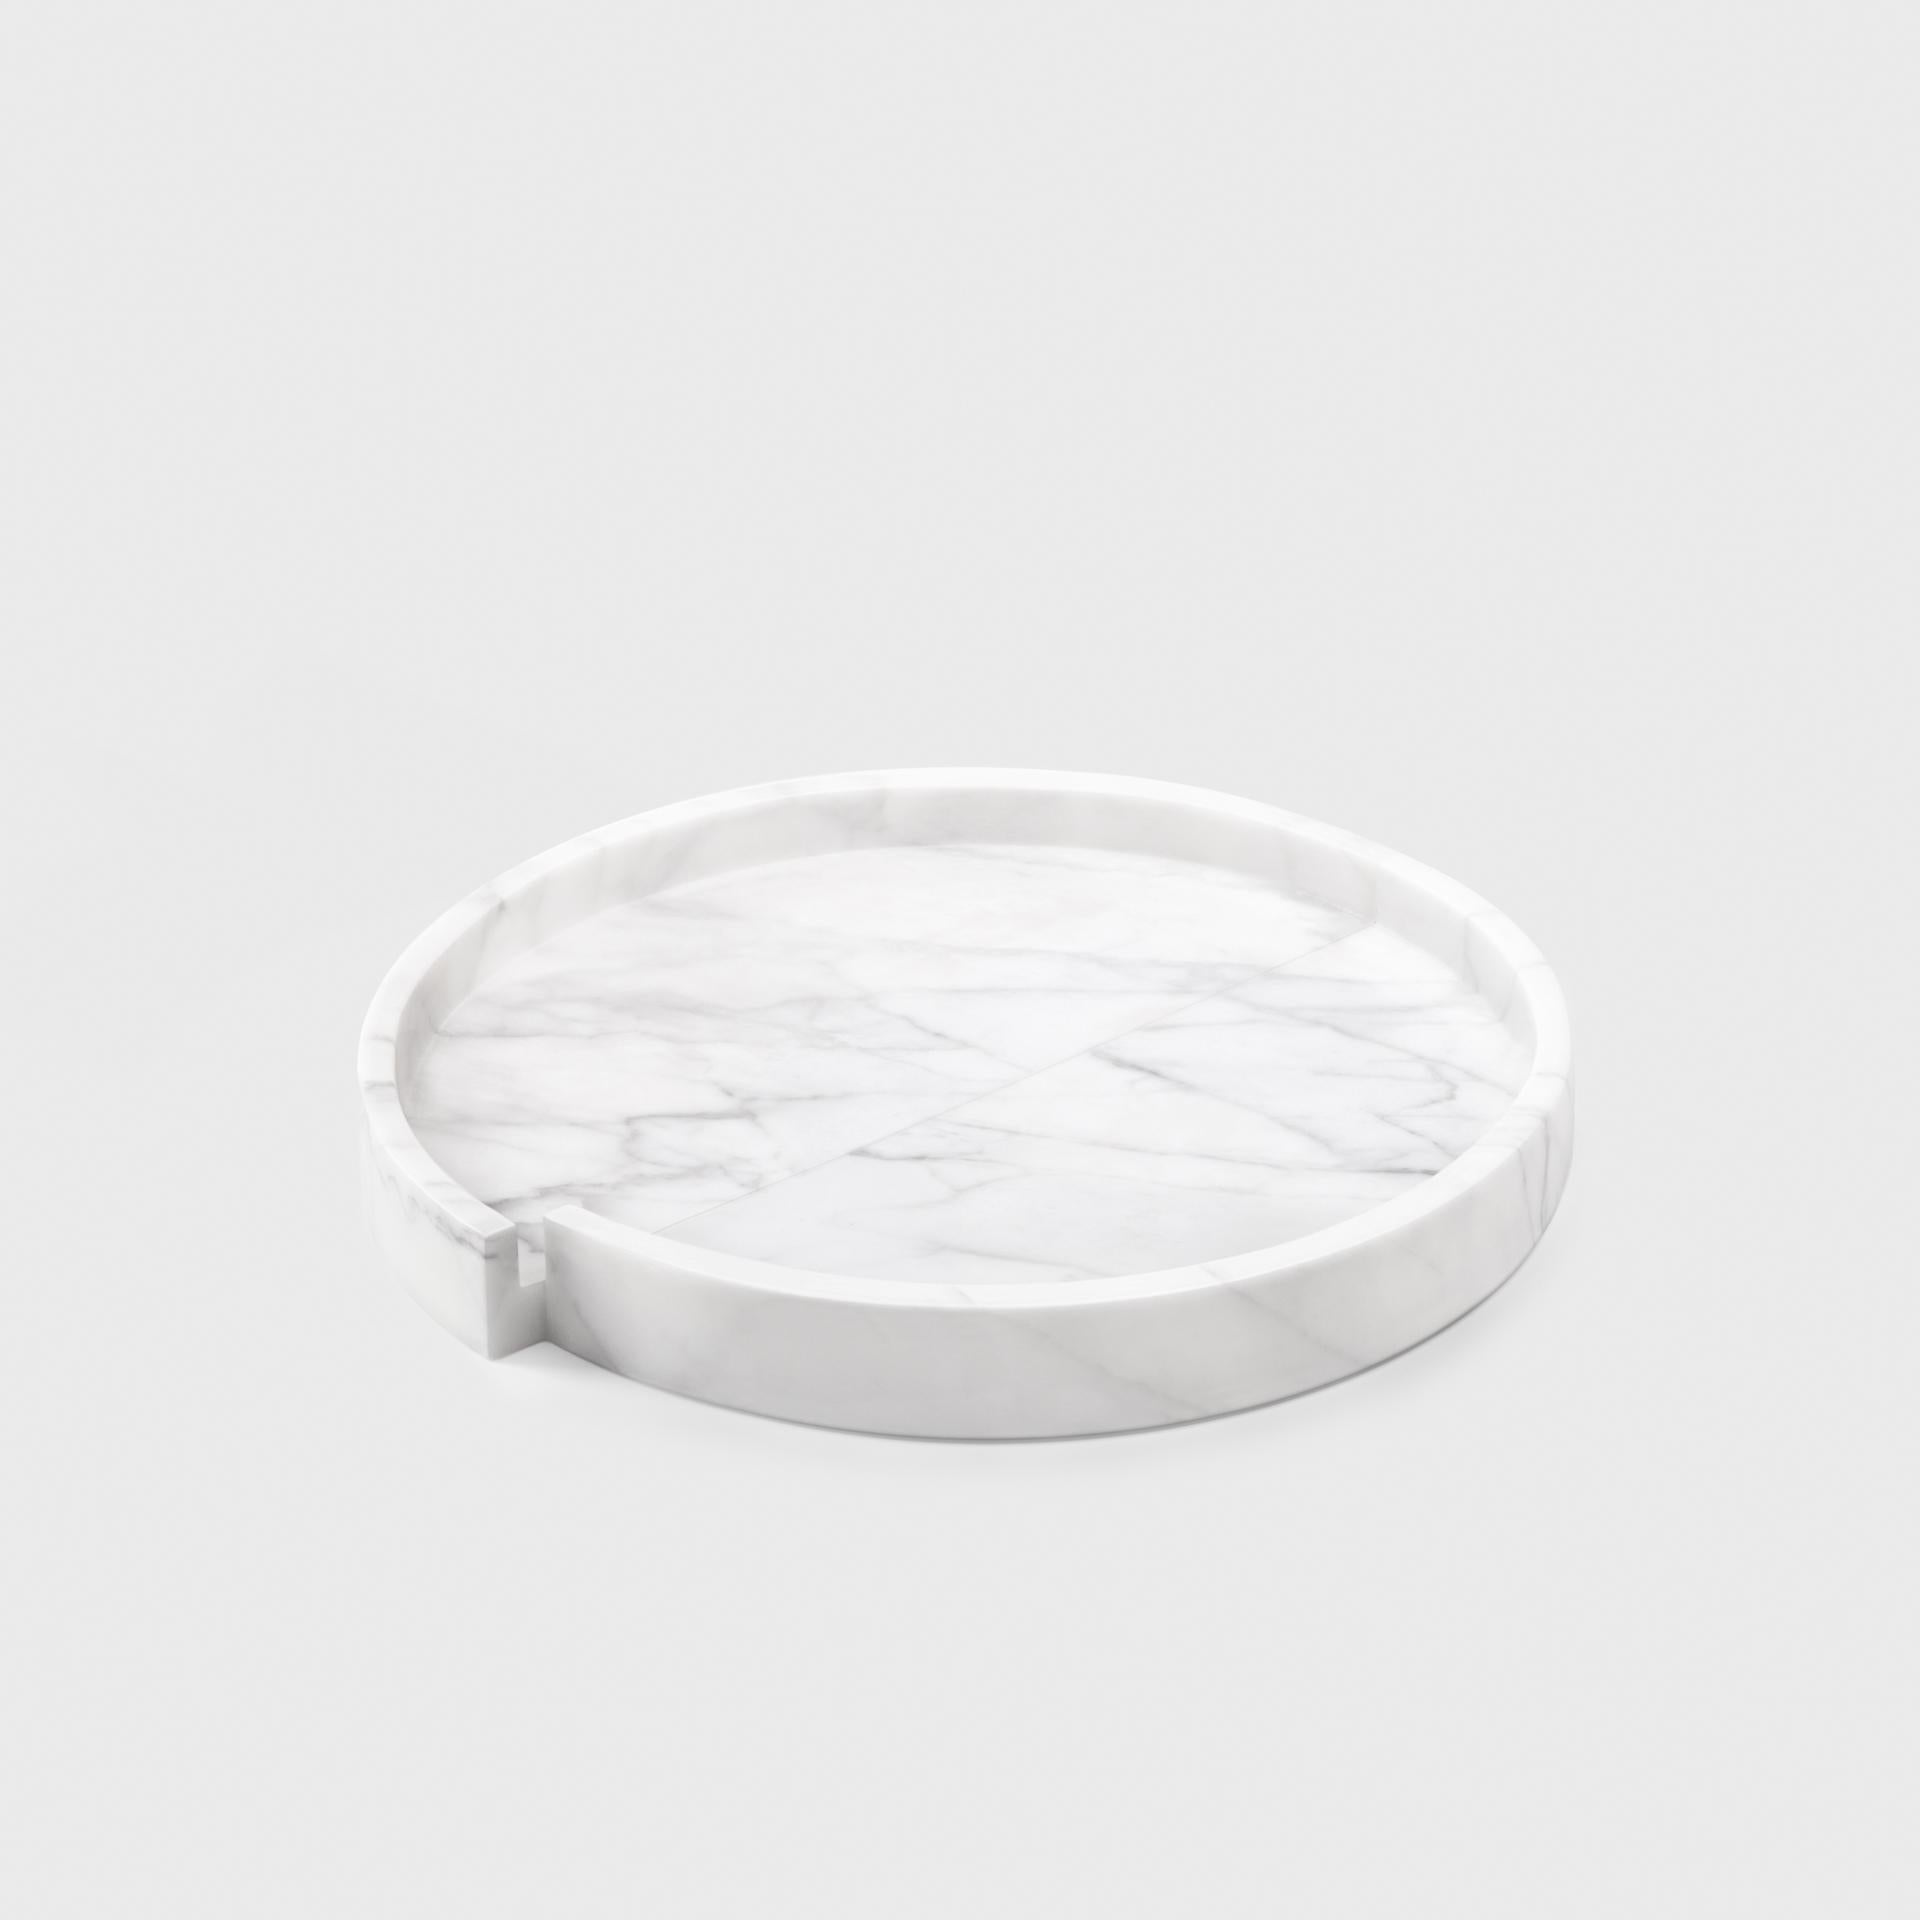 Deconstructivist Modern Tray by Sandro Lopez, Italian White Statuary Marble For Sale 2